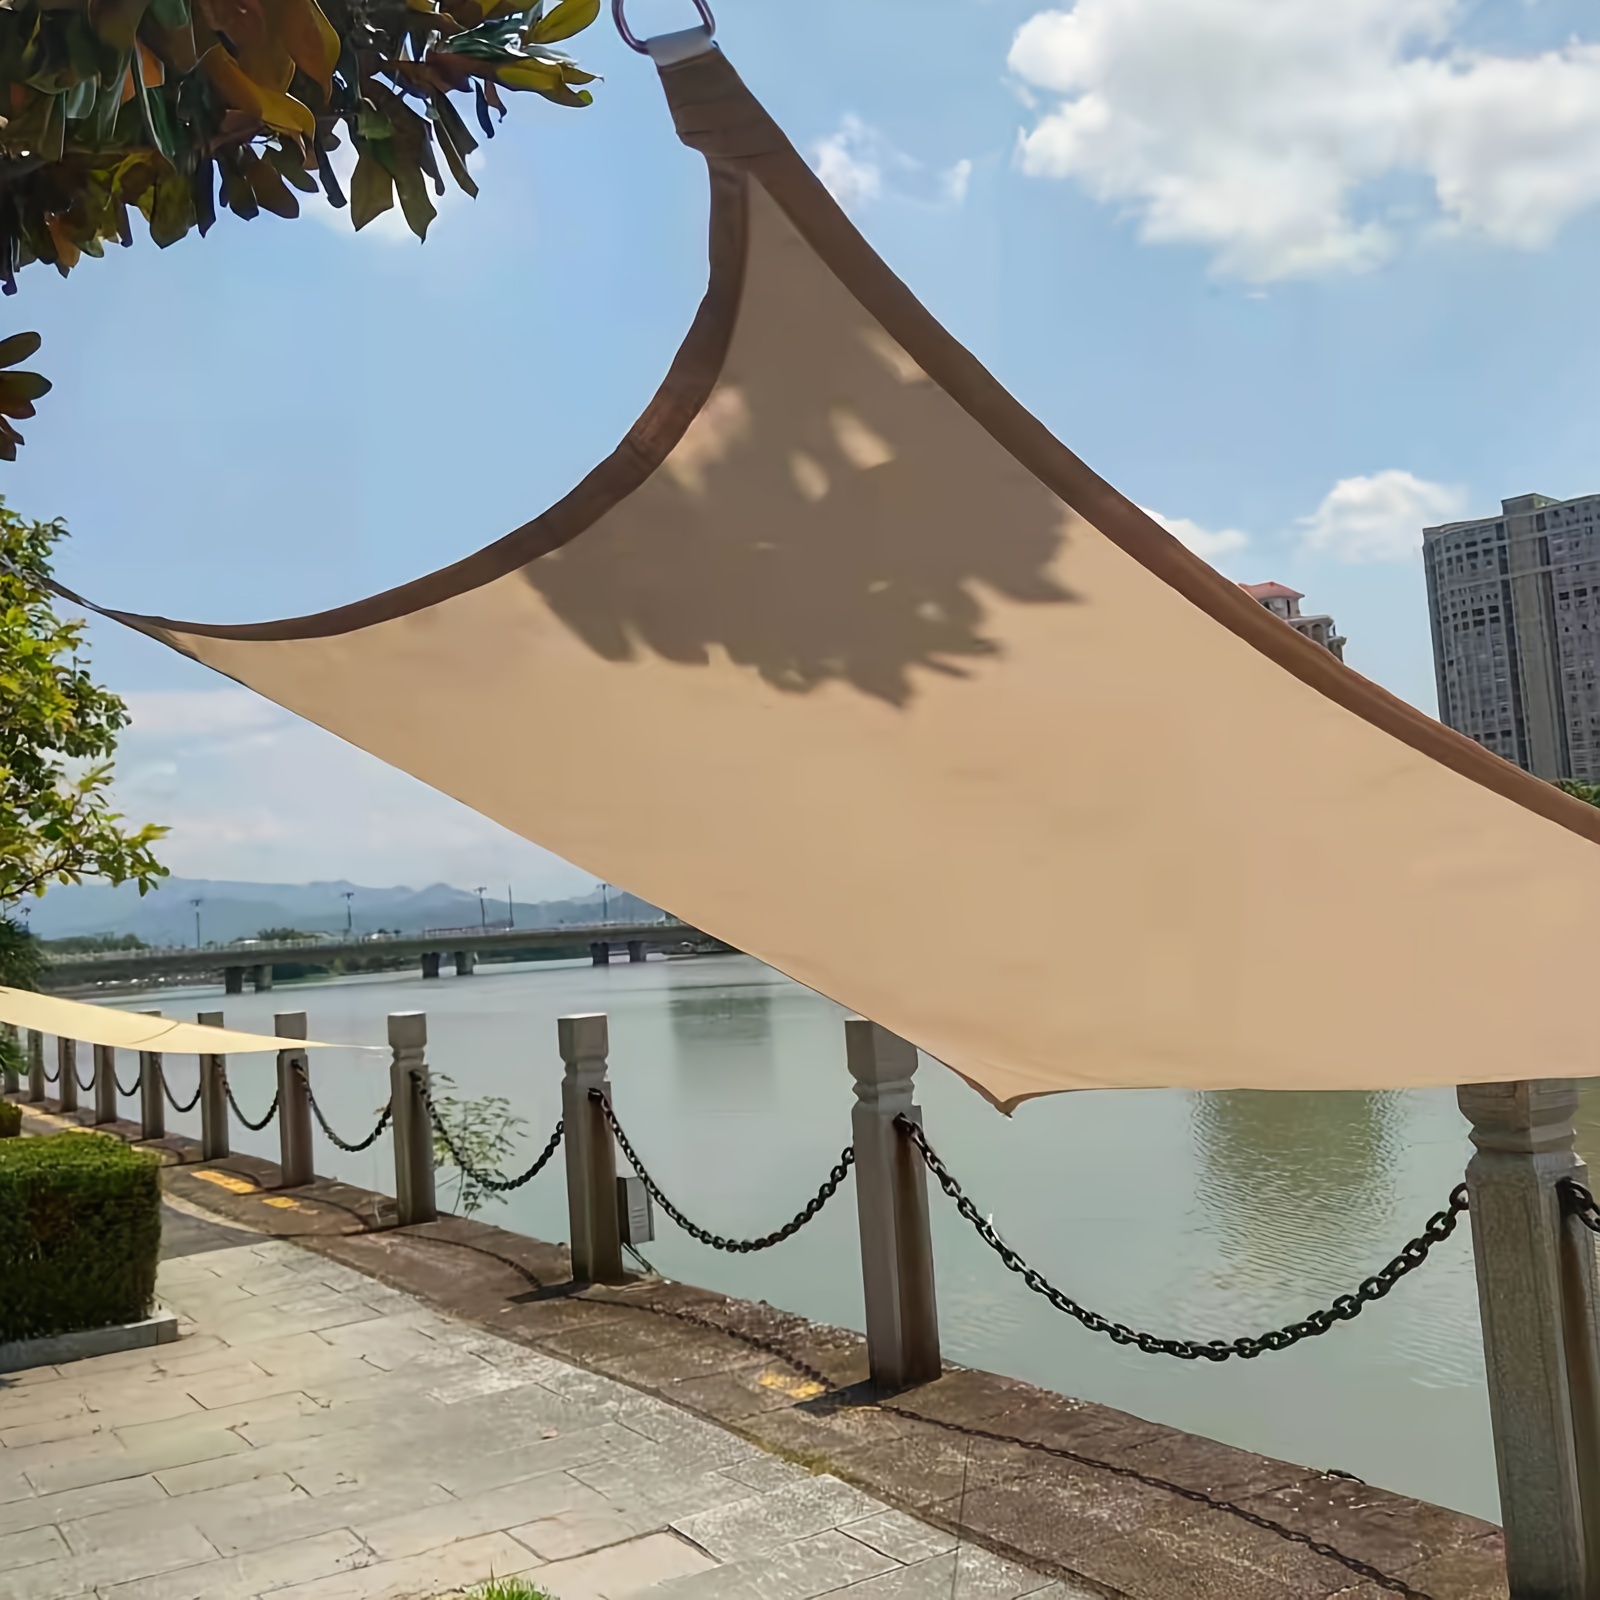 Outdoor Water And Sun Shield Fabric Spray Summer Fabric - Temu